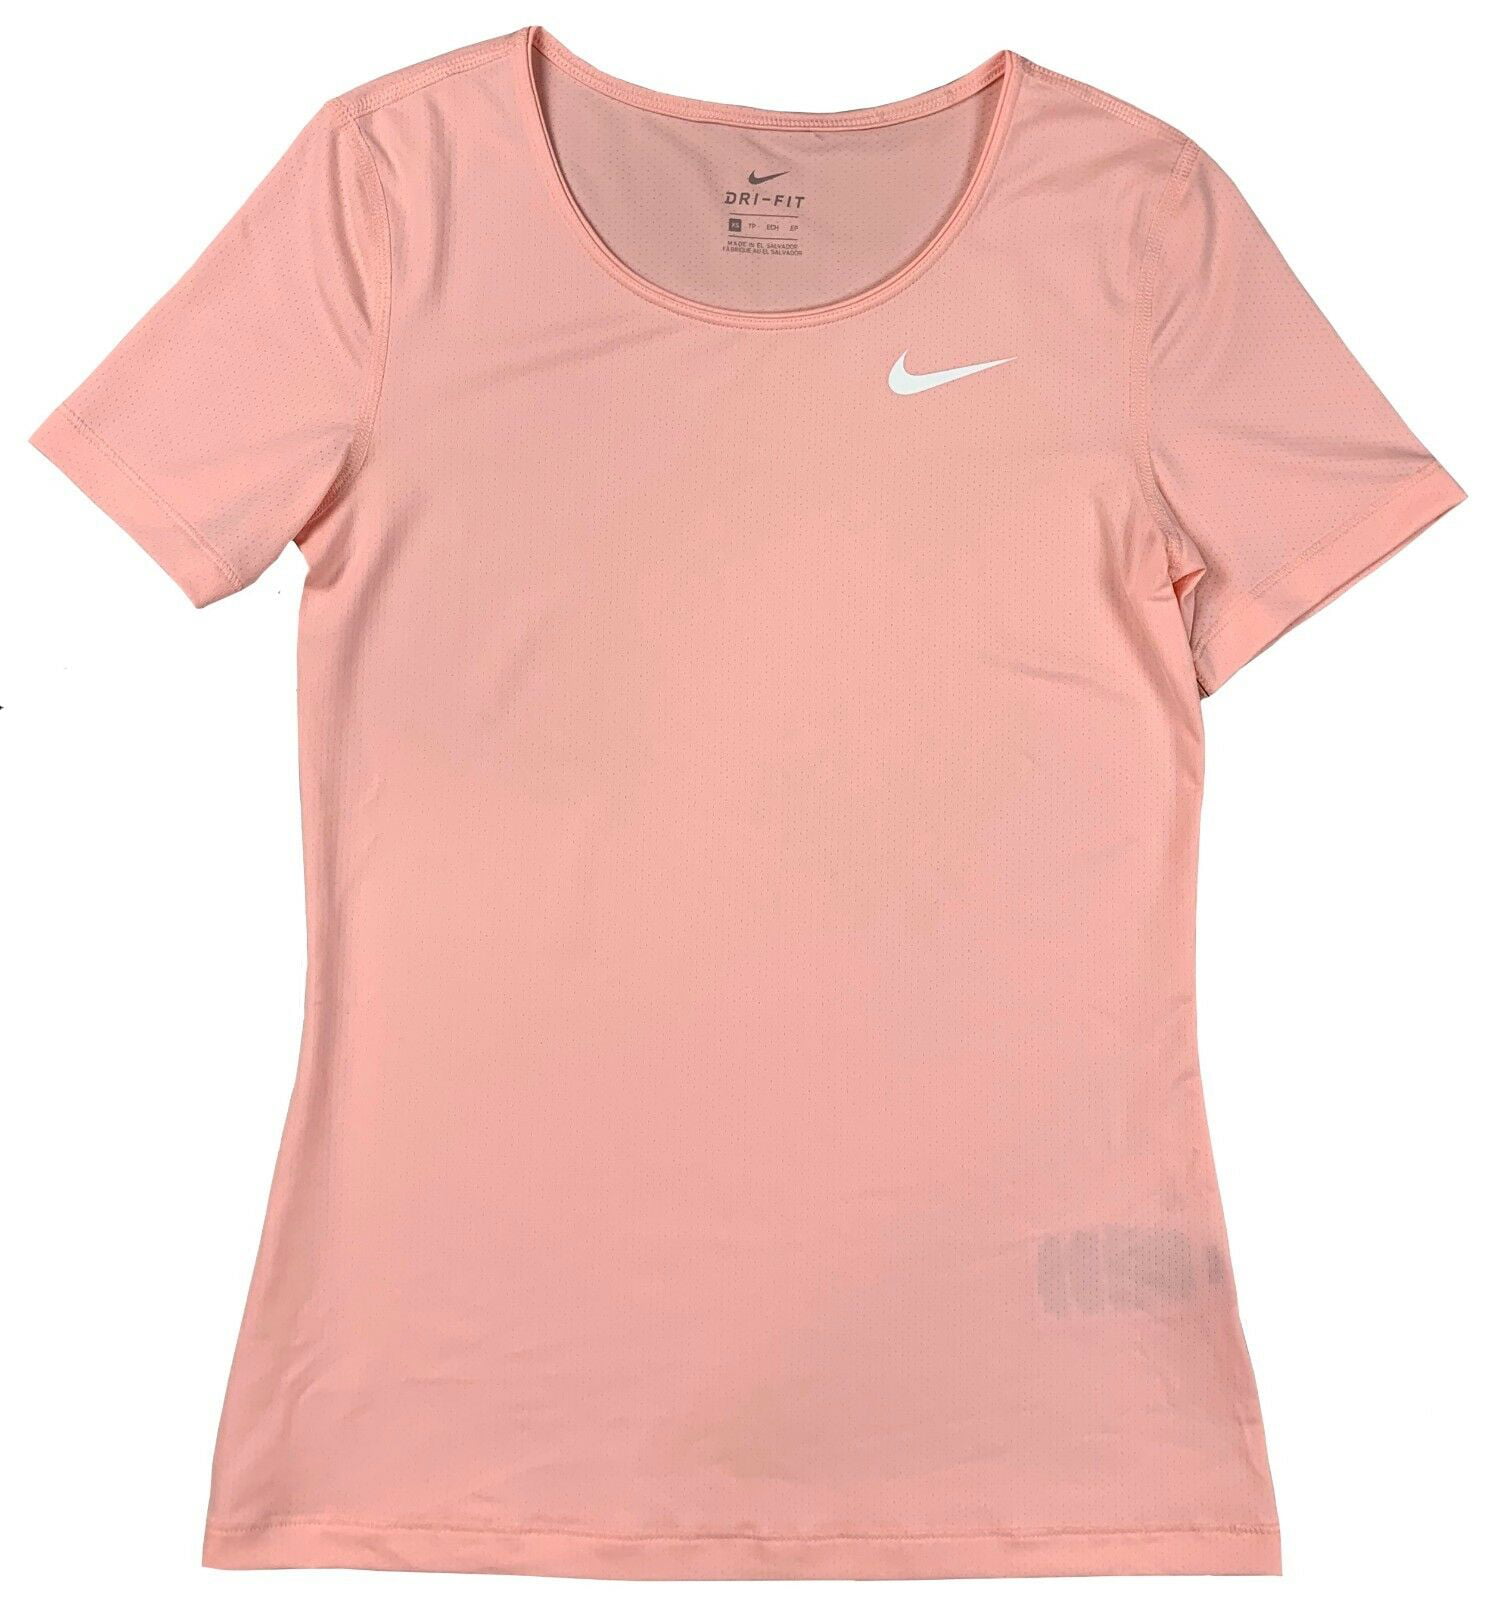 Nike - Nike Womens Pro Dri-Fit Allover Mesh Training Top Shirt Peach ...